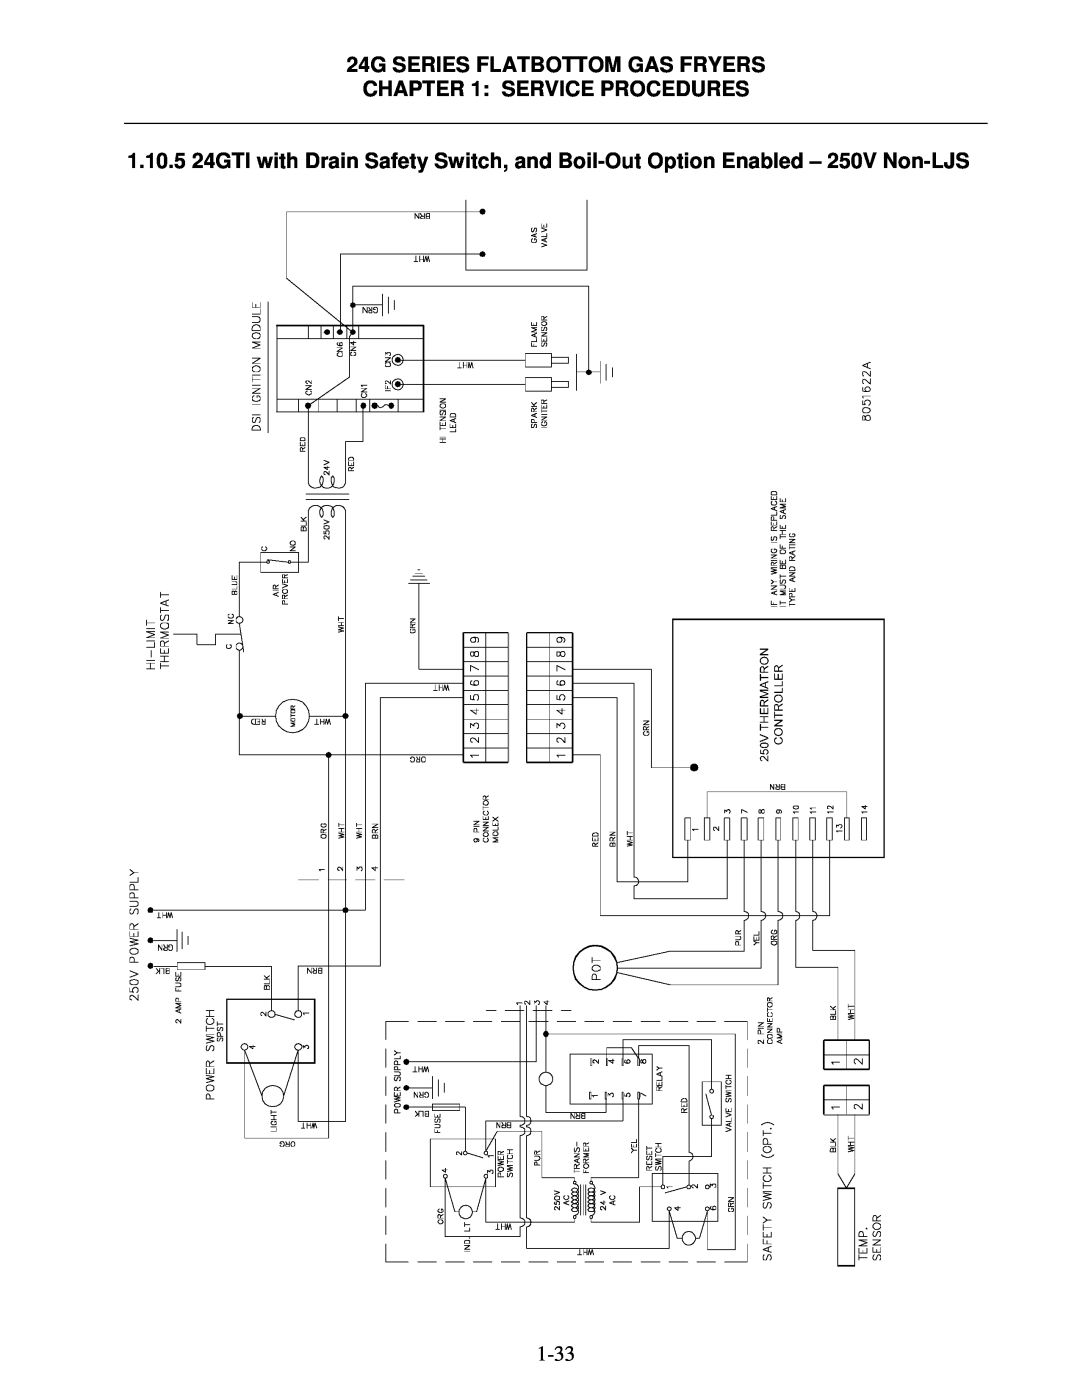 Frymaster 1824/2424G manual 24G SERIES FLATBOTTOM GAS FRYERS SERVICE PROCEDURES 